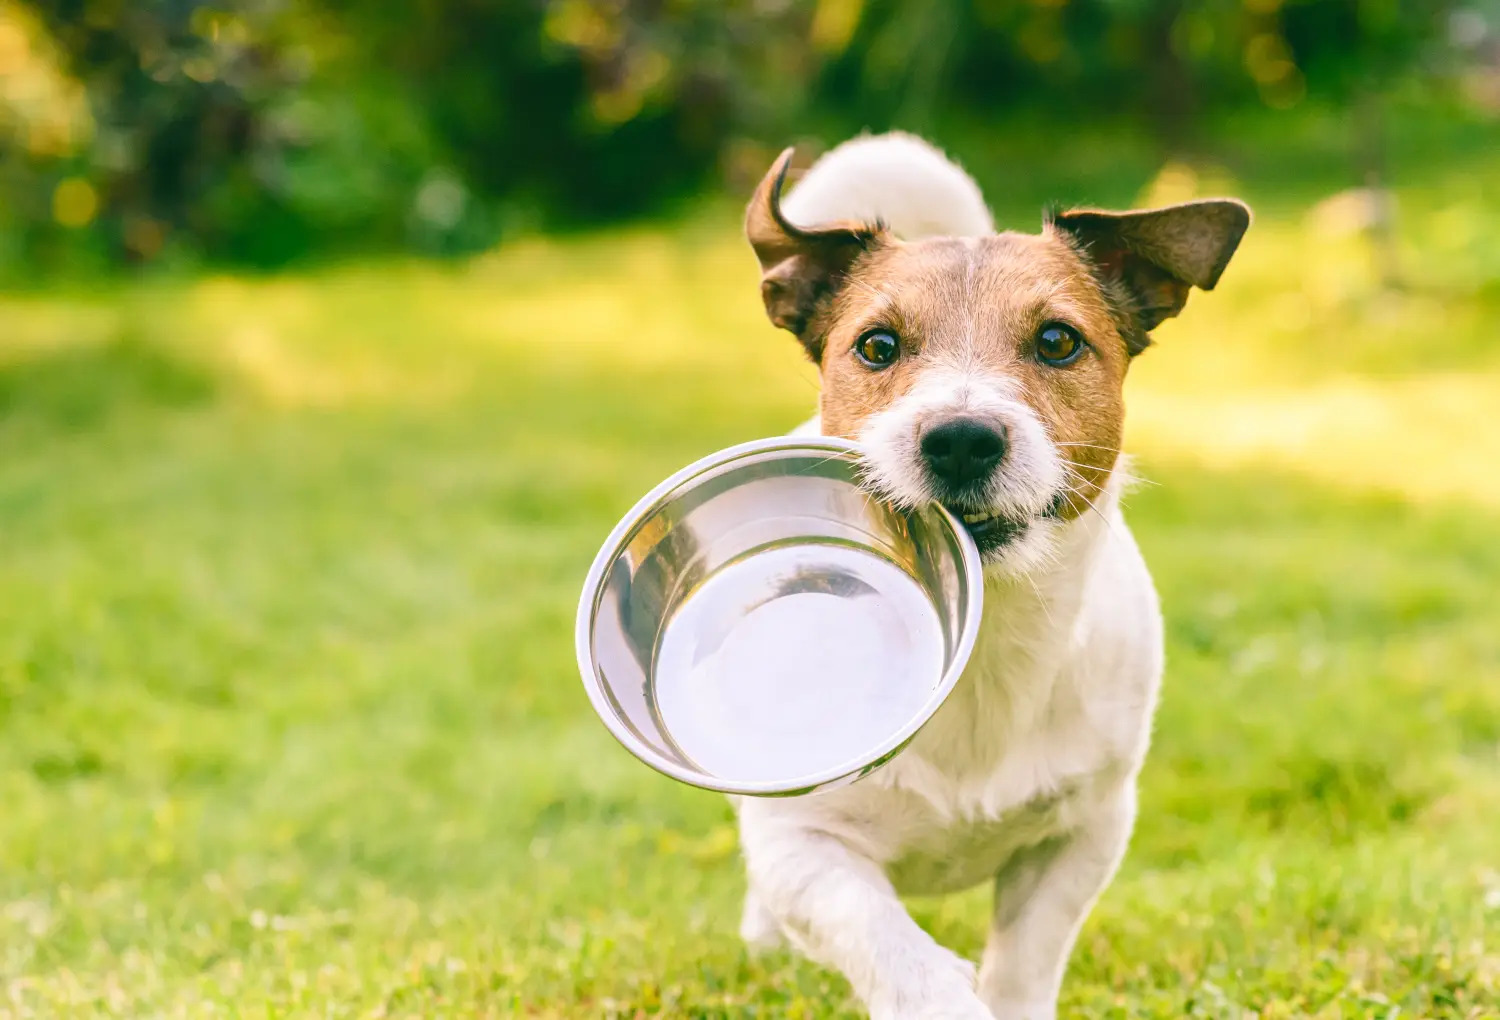 Hungriger oder durstiger Hund holt Metallschüssel, um Futter oder Wasser zu bekommen